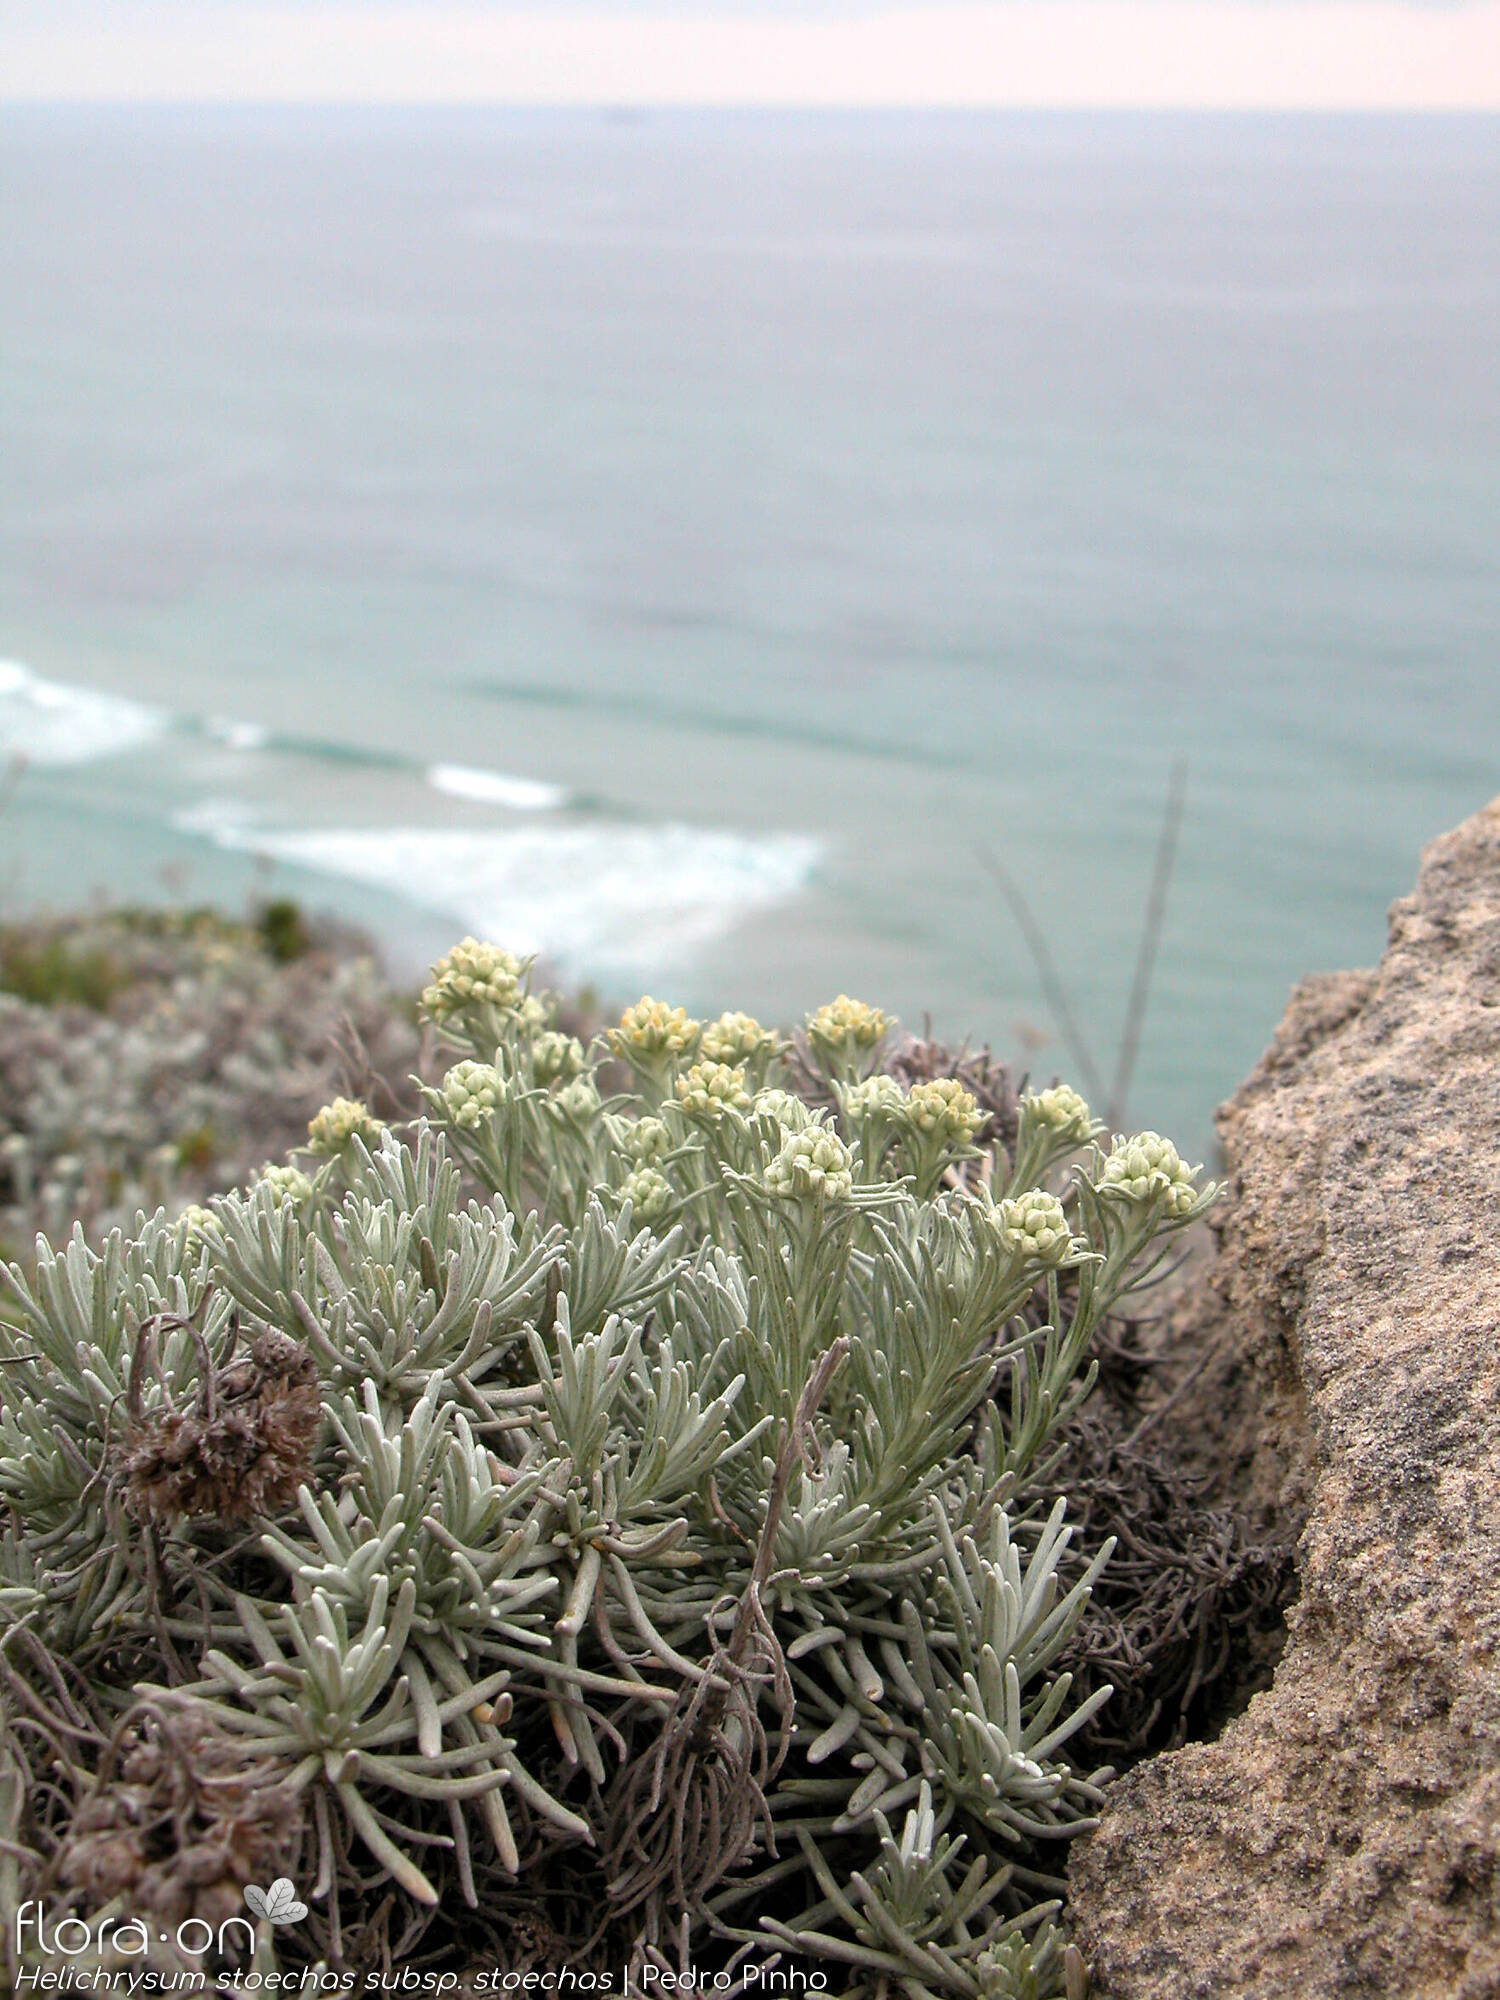 Helichrysum stoechas stoechas - Hábito | Pedro Pinho; CC BY-NC 4.0